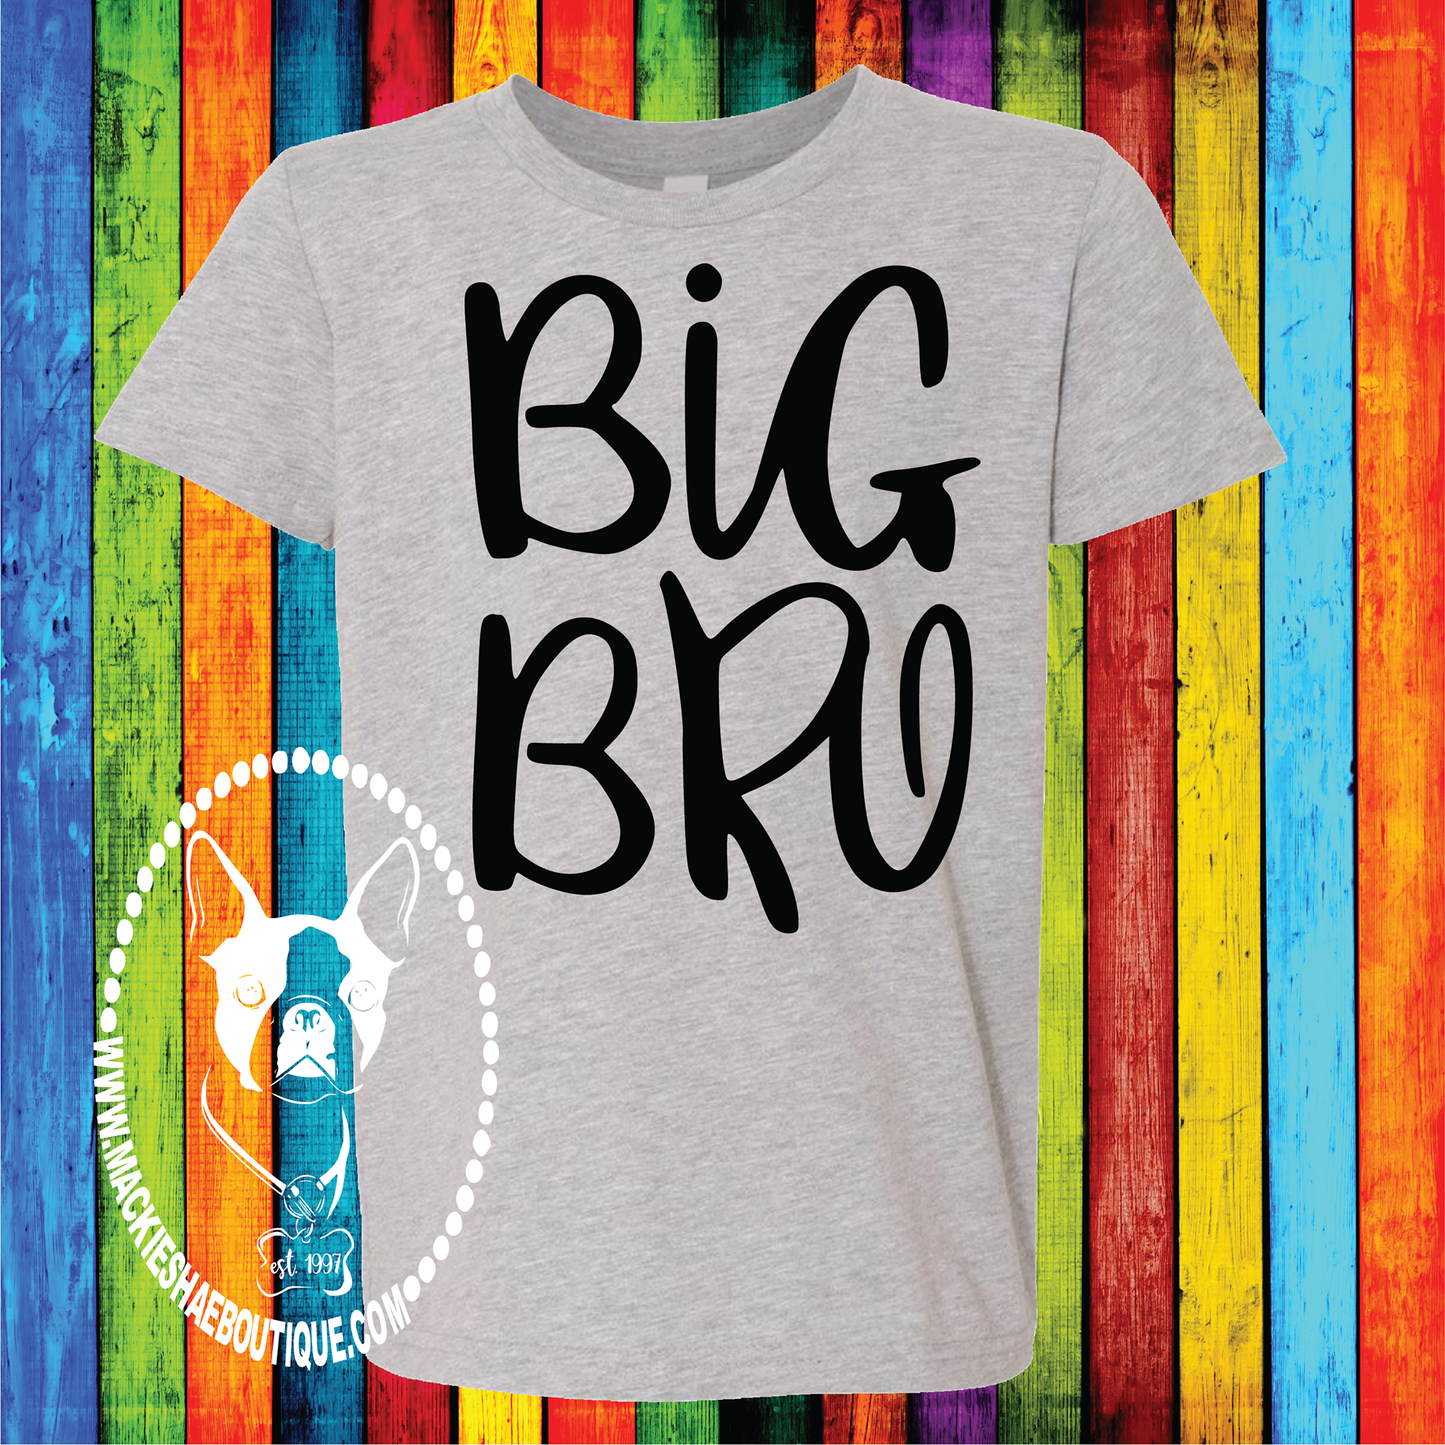 Big Bro (or Sis) Custom Shirt for Kids, Short Sleeve